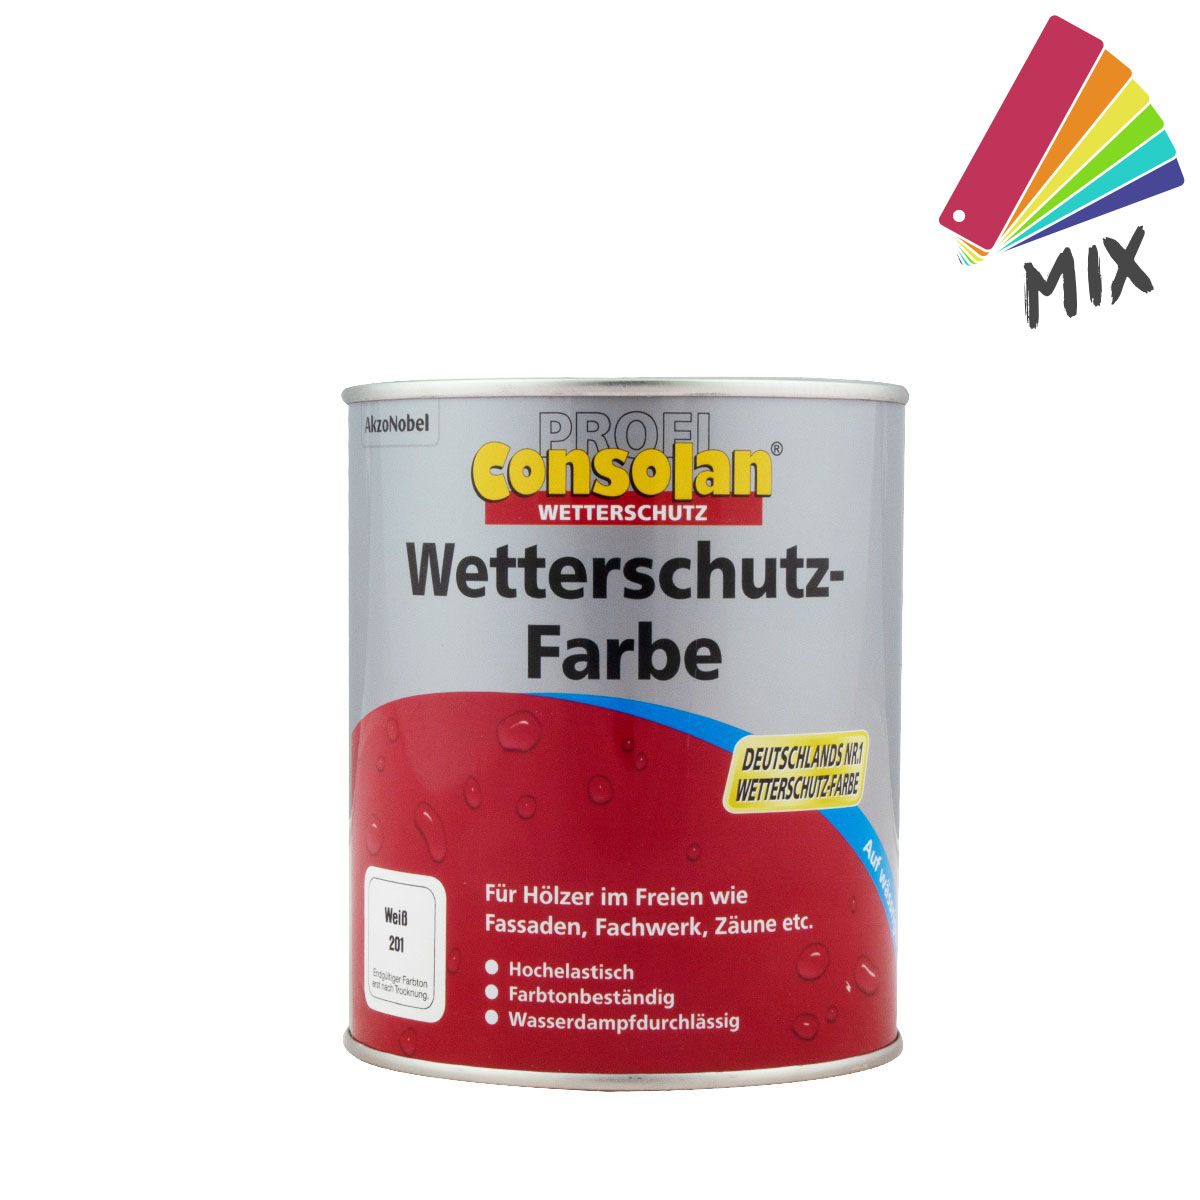 Consolan Profi Wetterschutz-Farbe 1L wunschfarbton